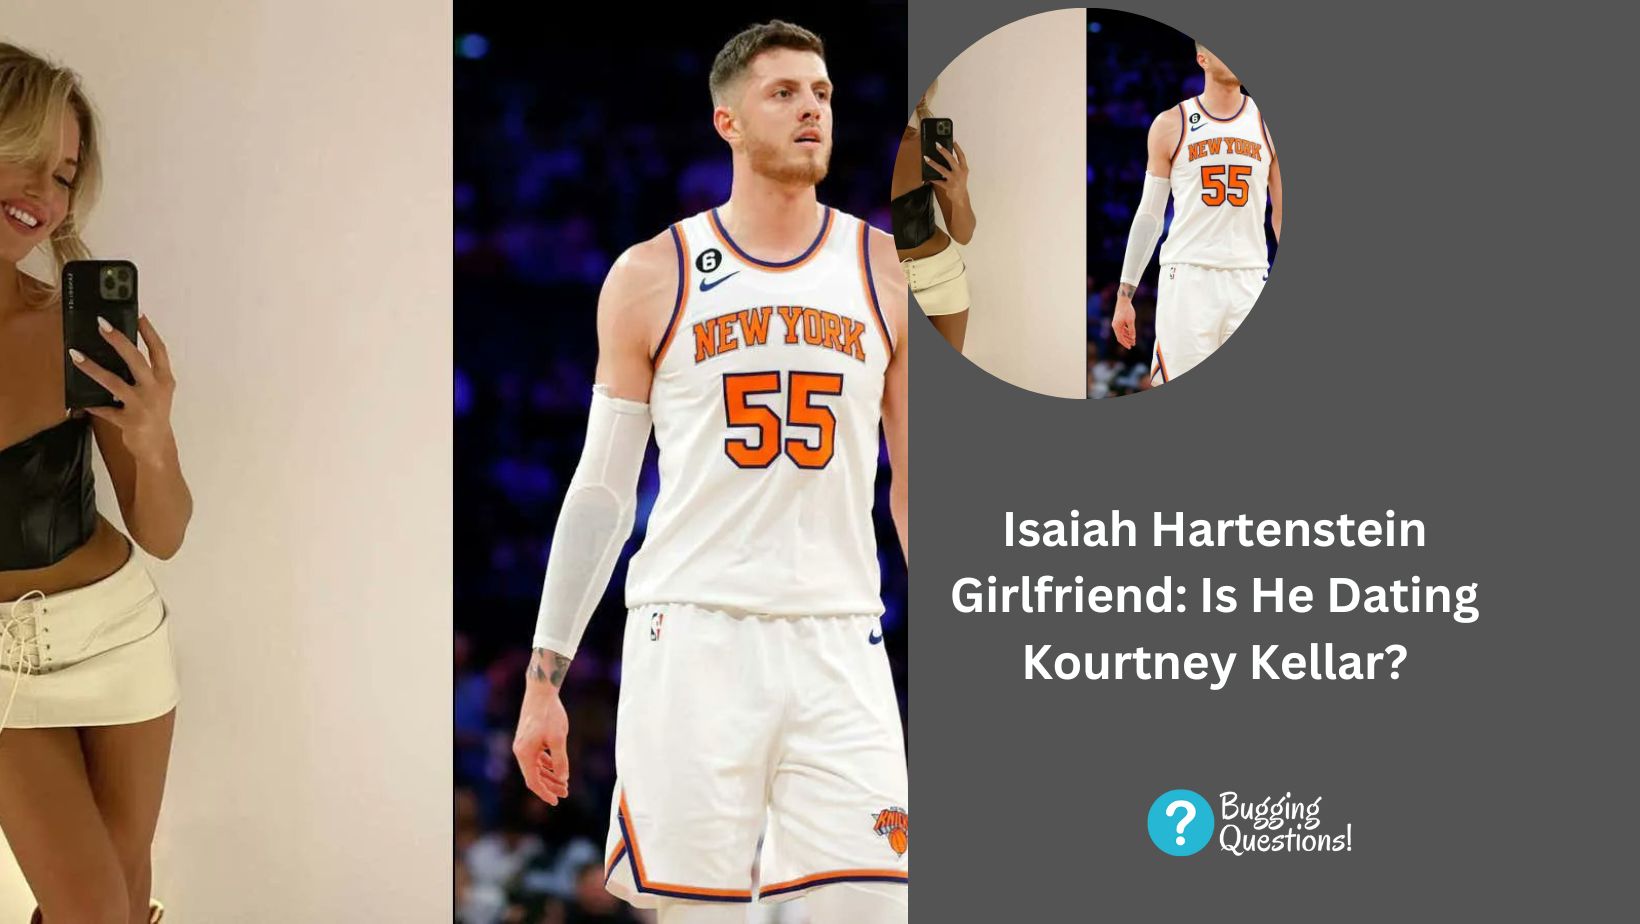 Isaiah Hartenstein Girlfriend: Is He Dating Kourtney Kellar?